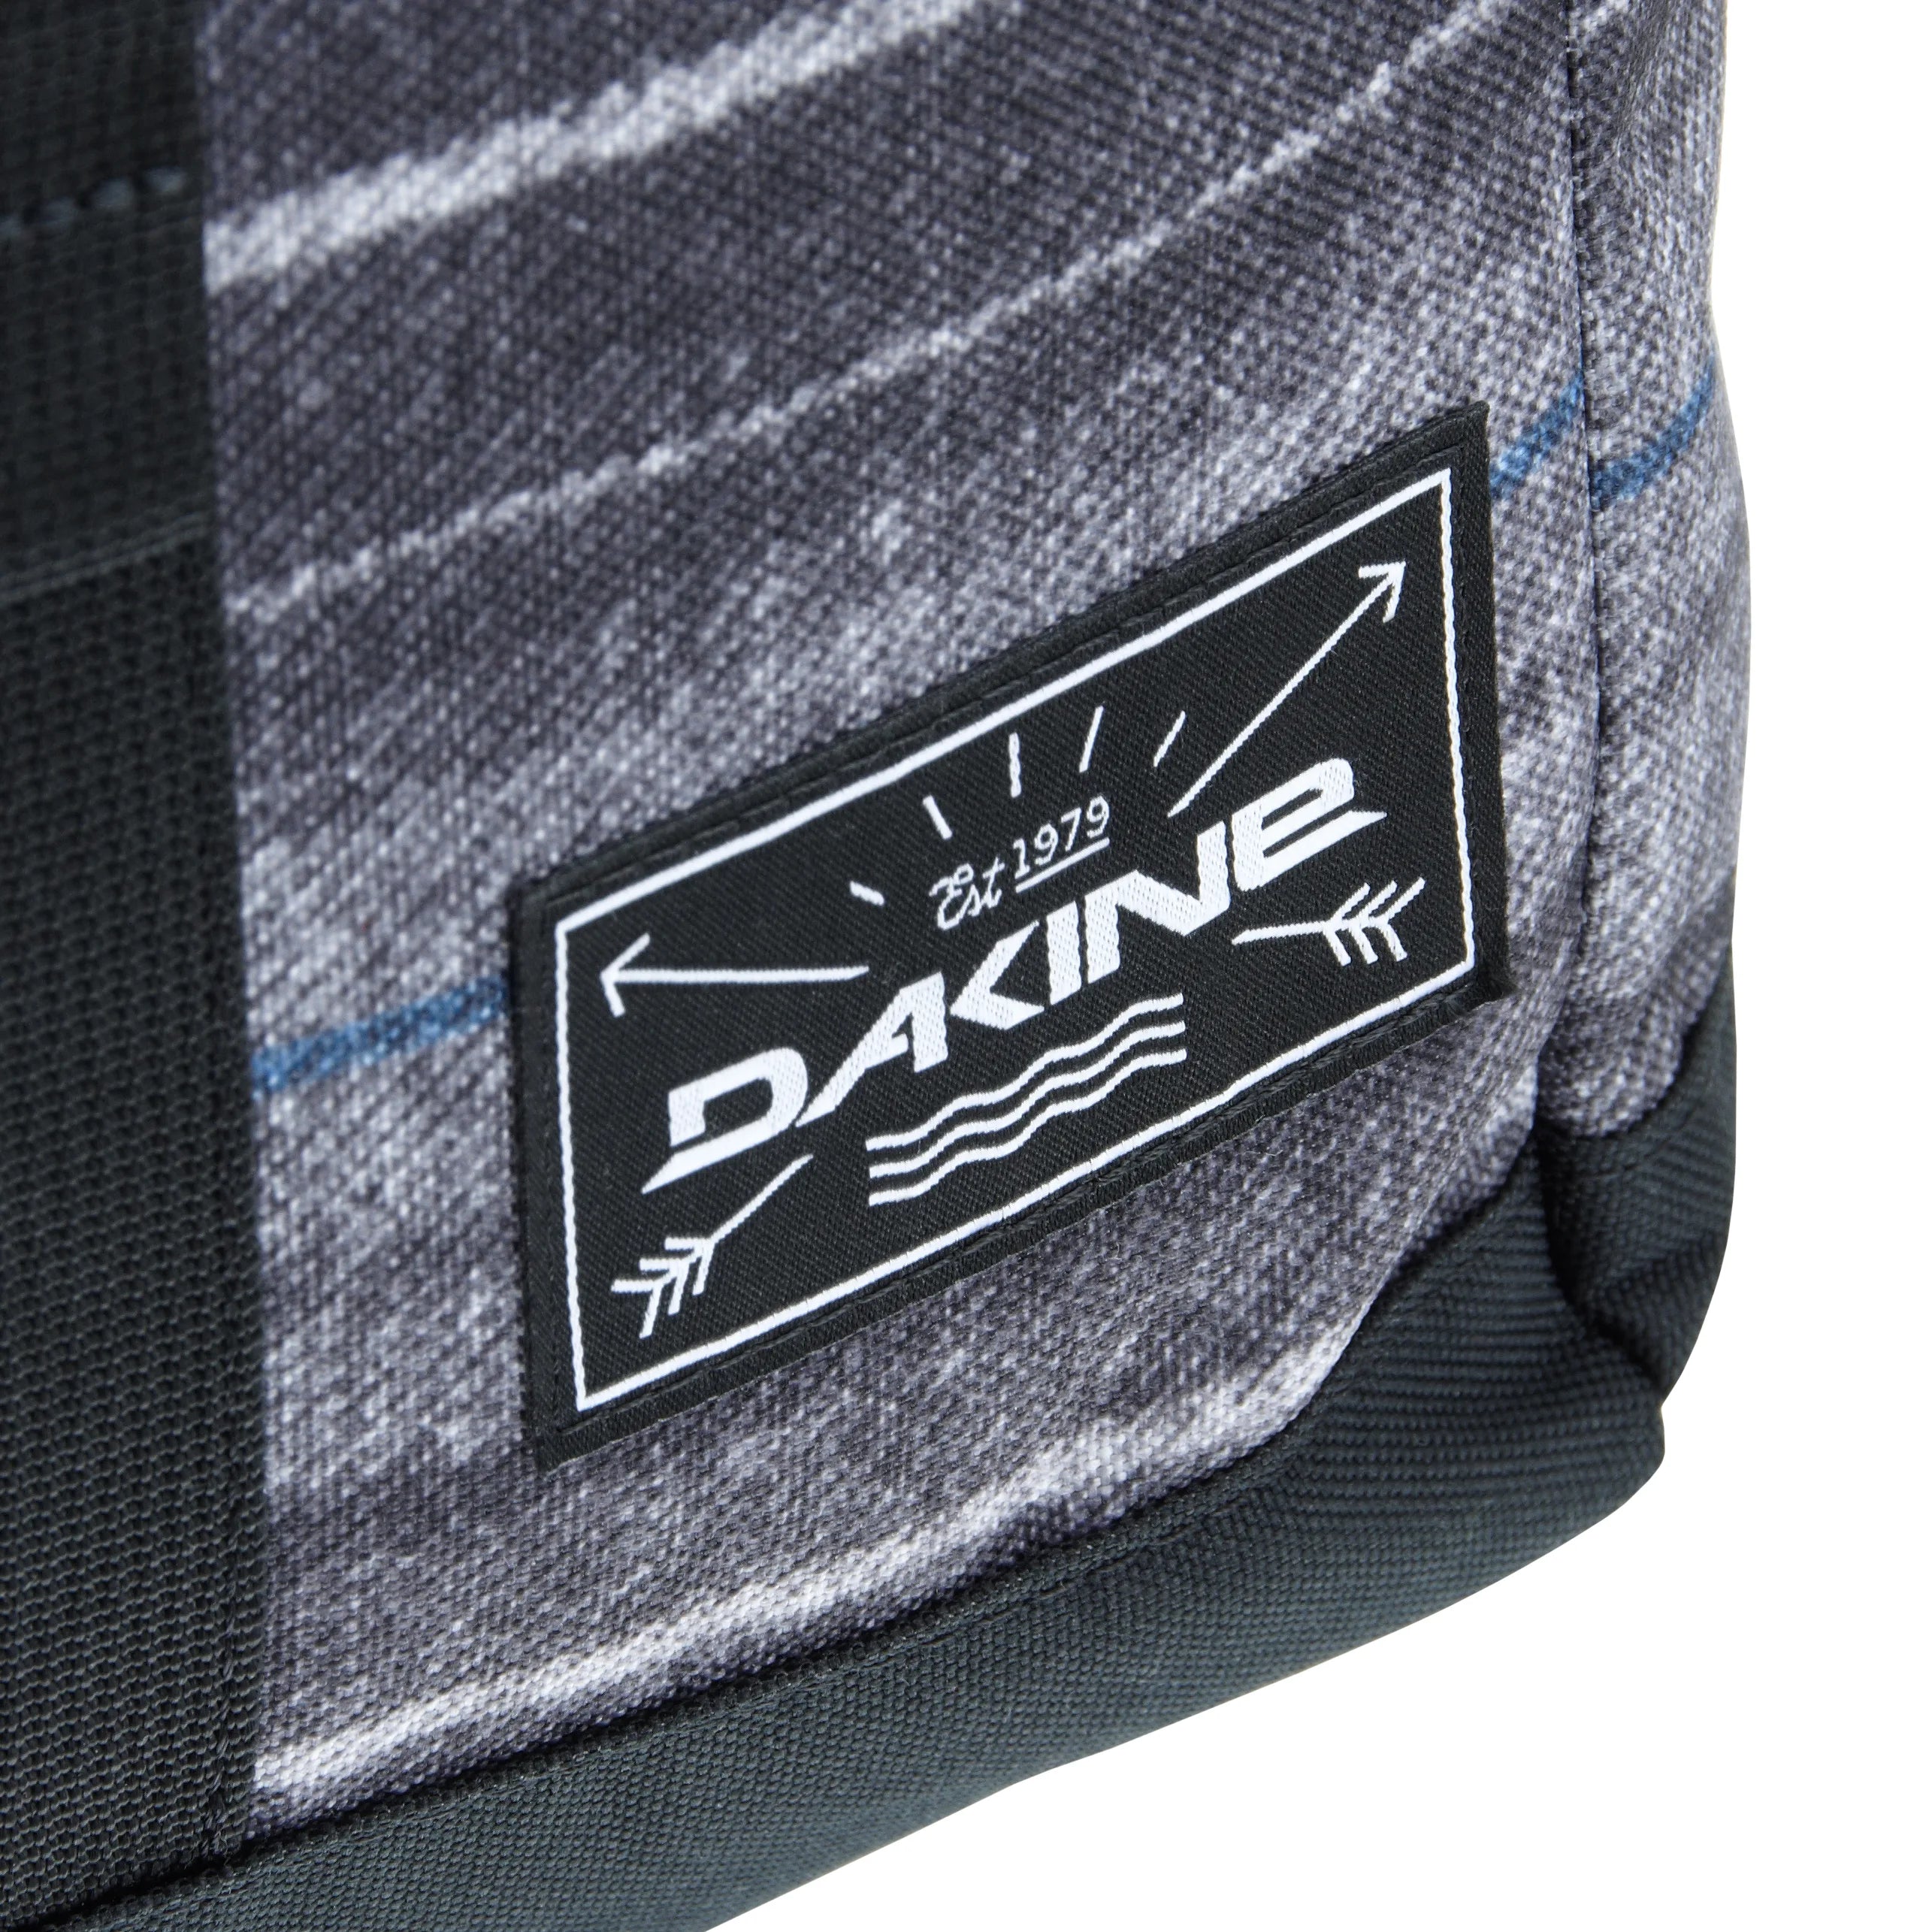 Dakine Boys Packs Range Laptop Backpack 48 cm - brick